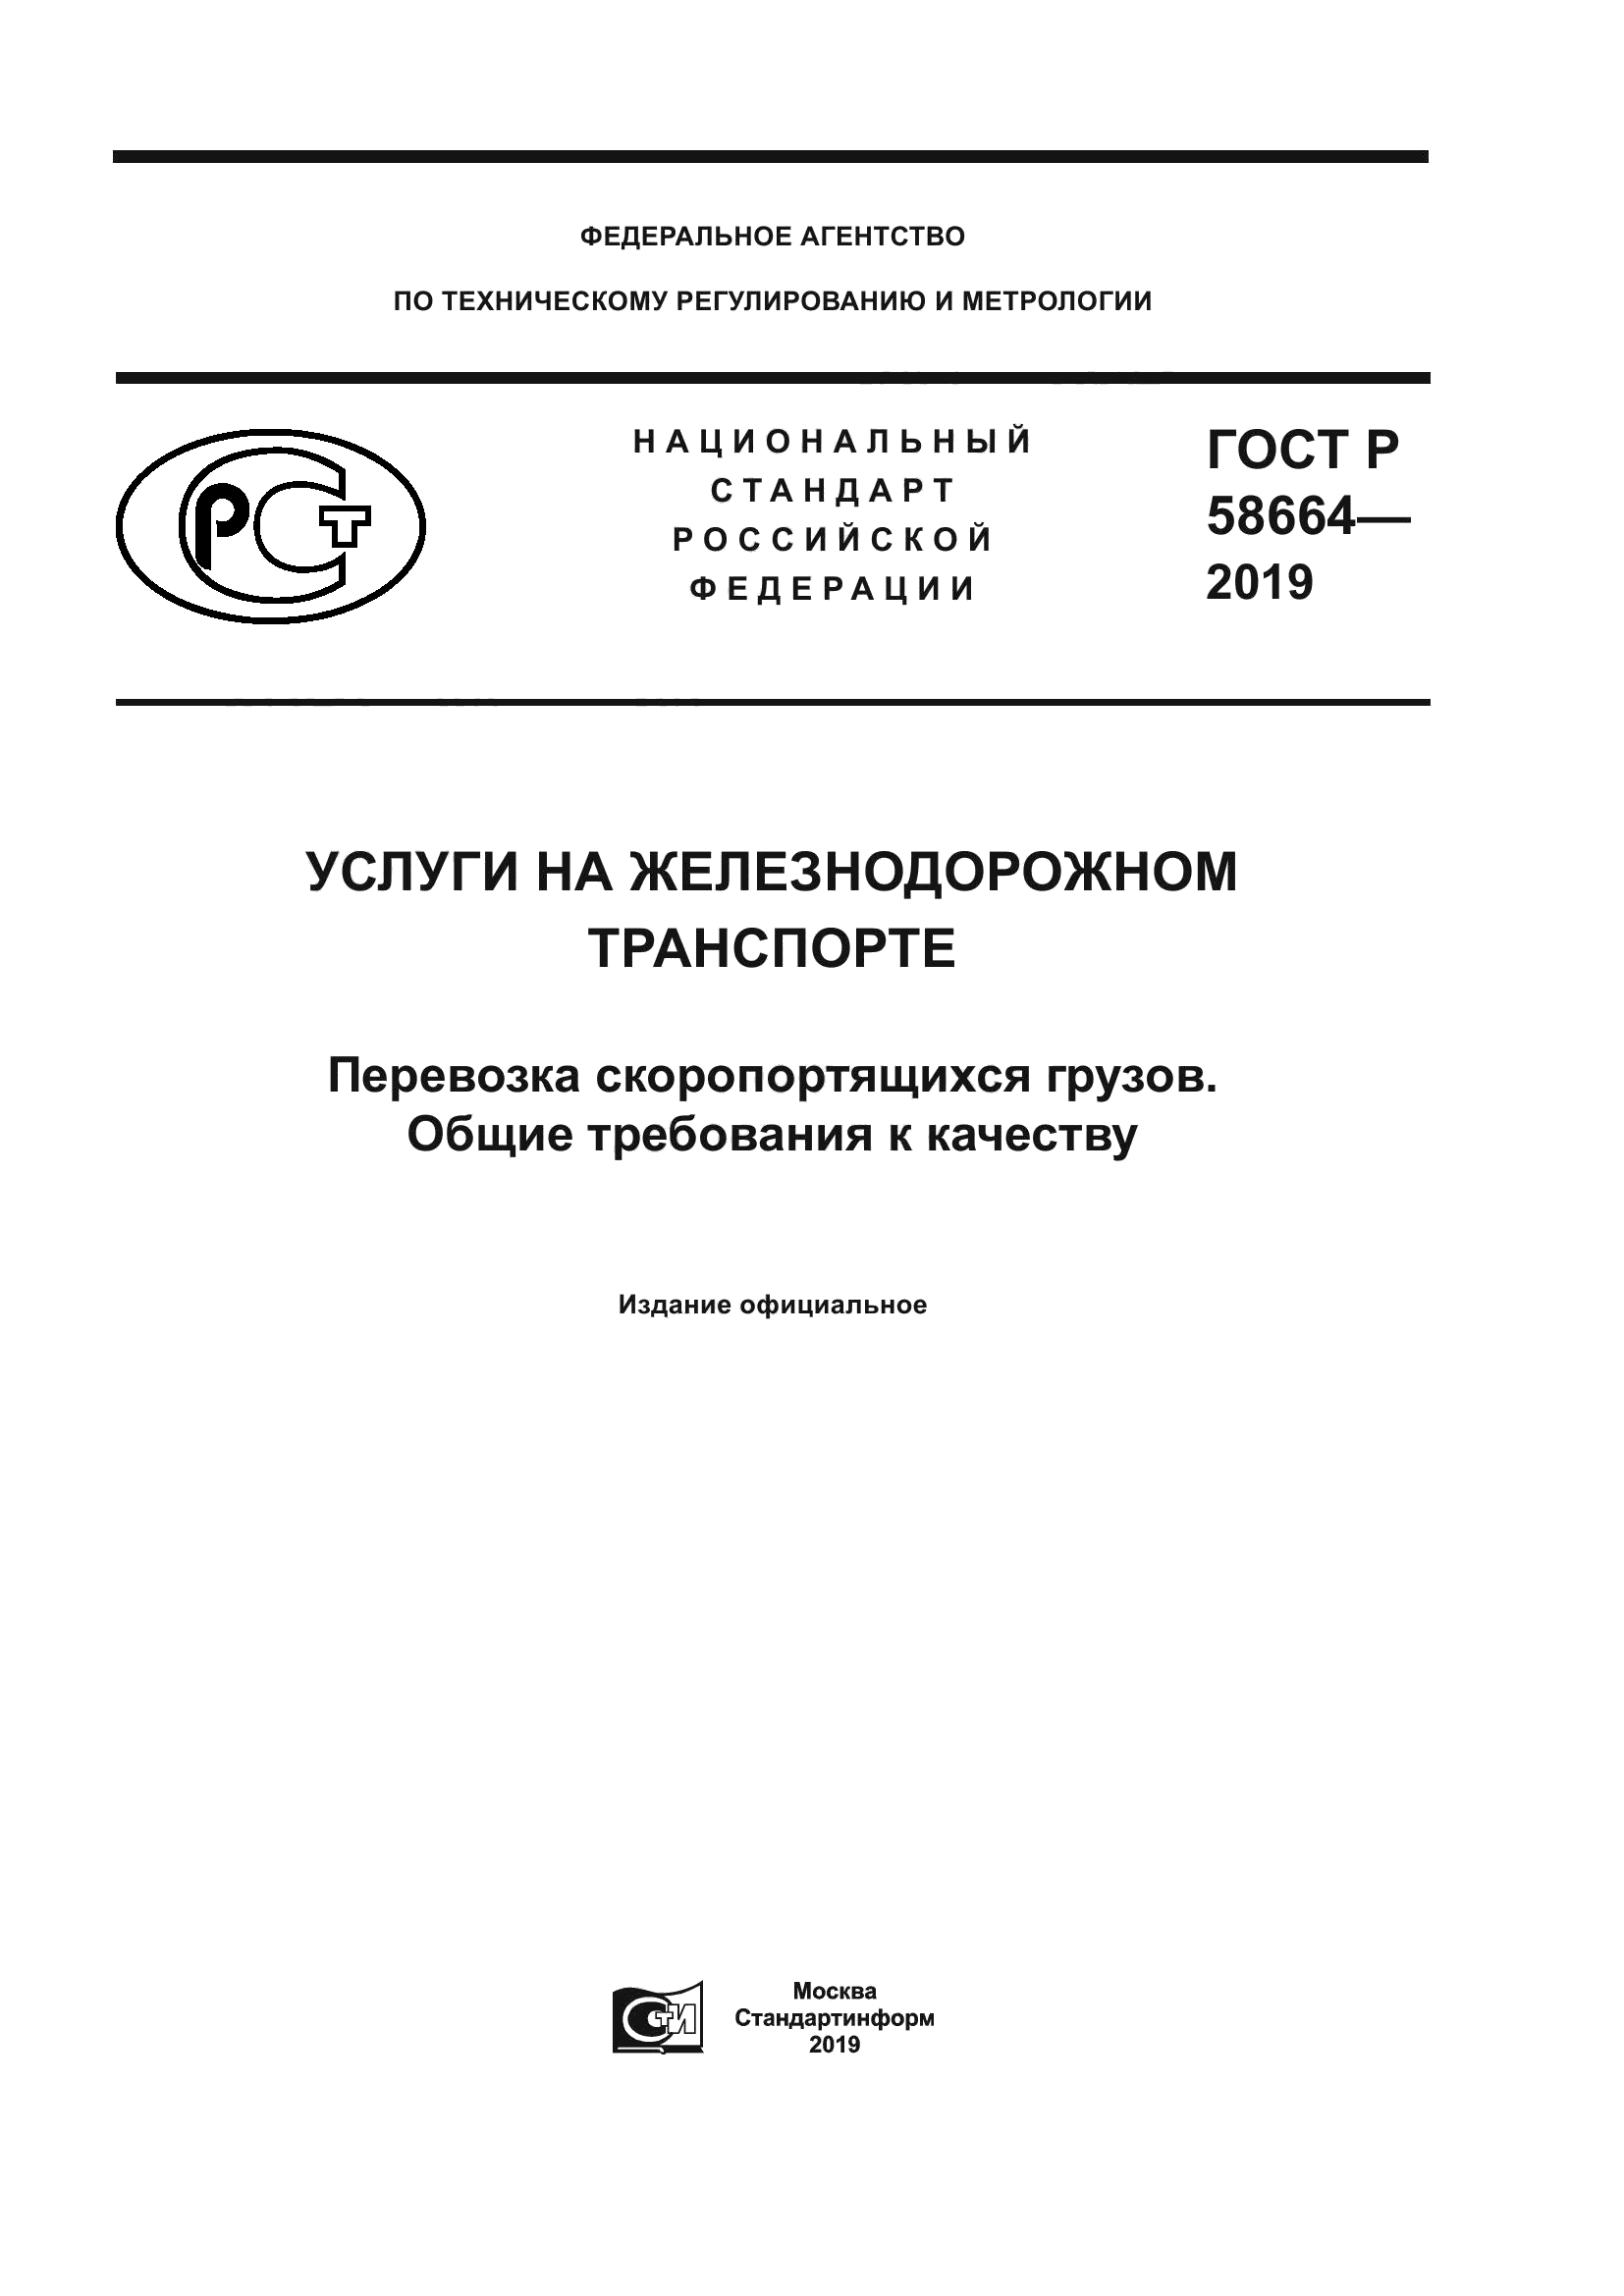 ГОСТ Р 58664-2019